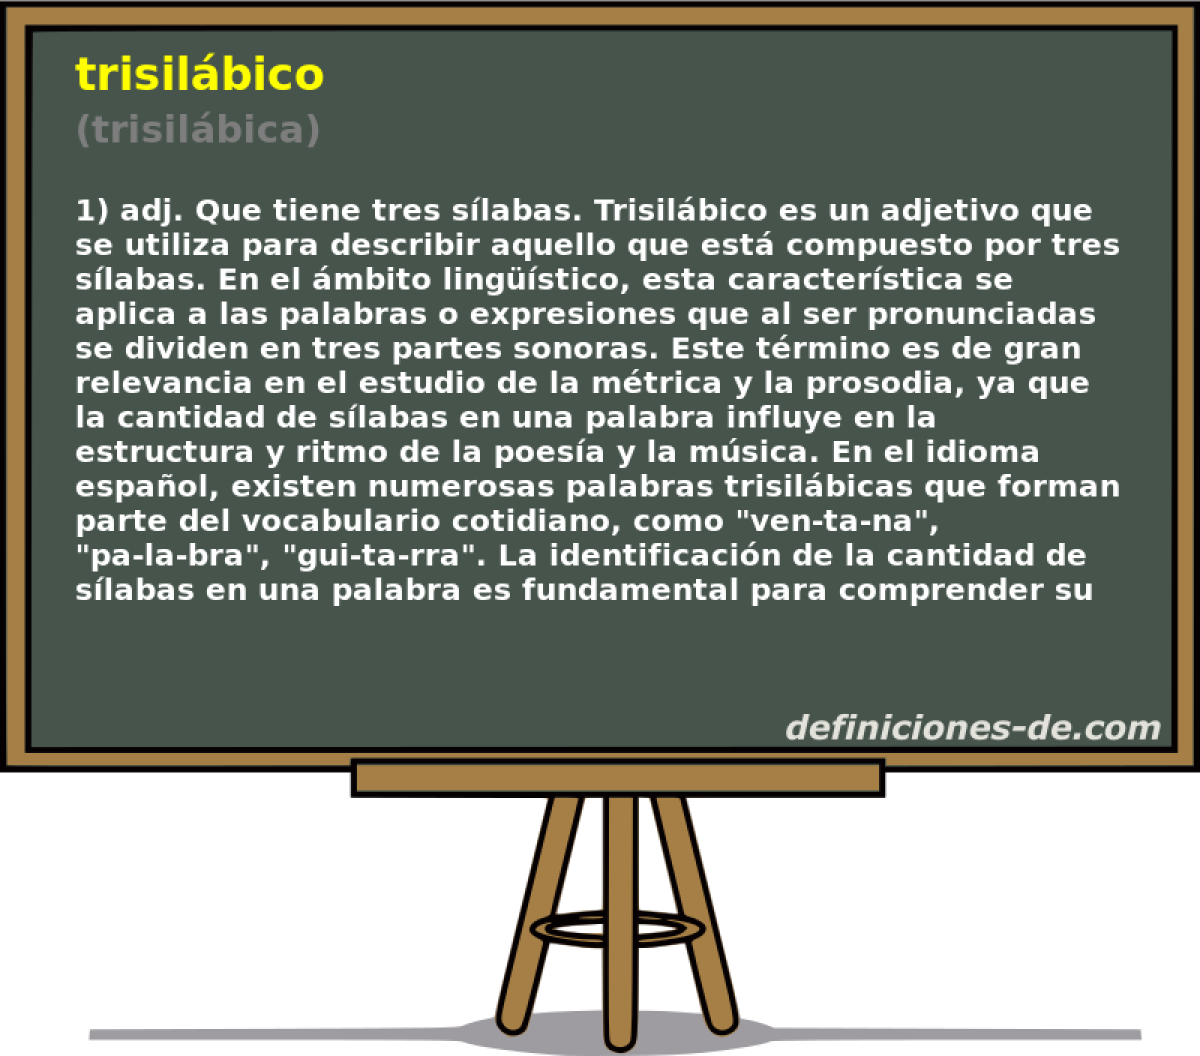 trisilbico (trisilbica)